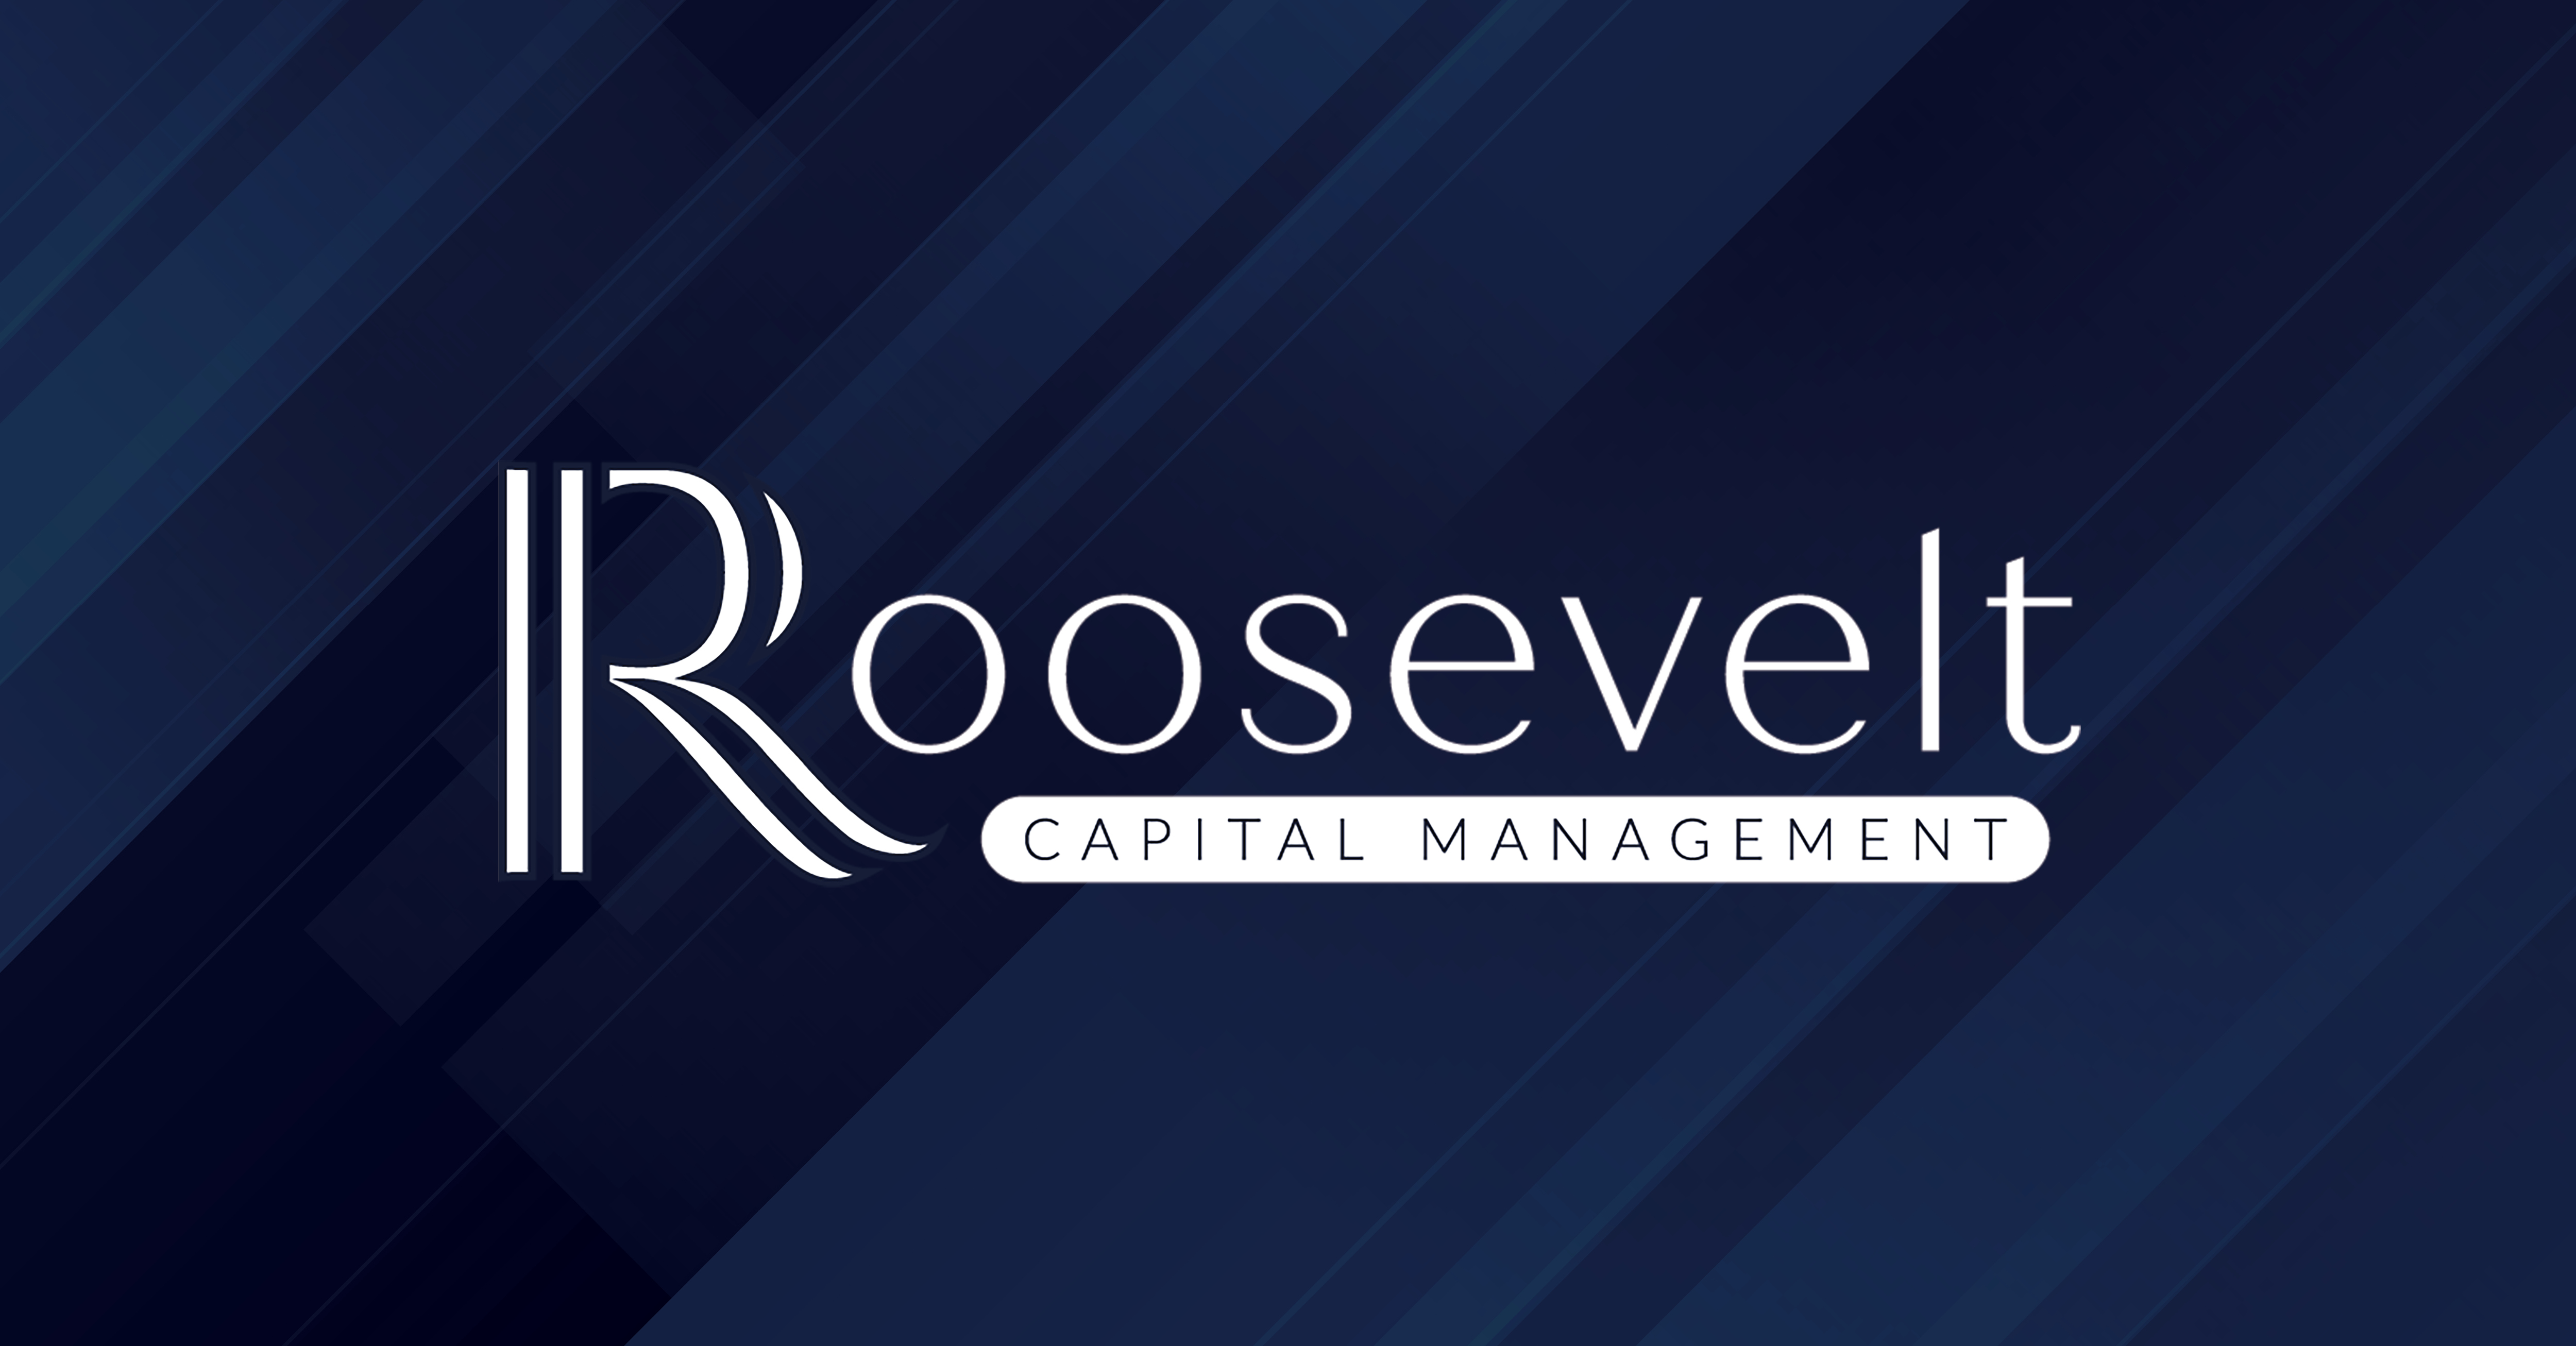 Roosevelt Capital Management becomes internal advisor on the SMArtX Advisory Solutions platform